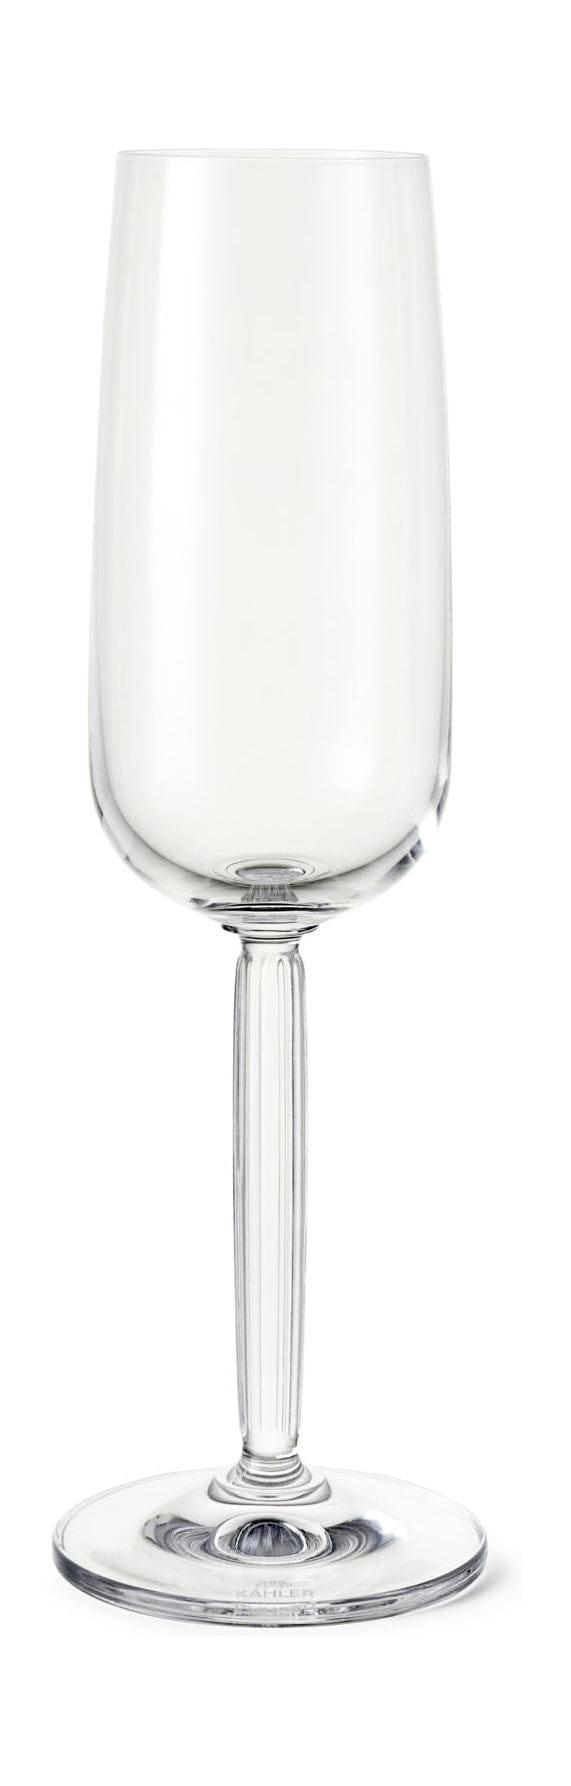 Kähler Hammershøi Champagne Glass Set van 240 ml, helder